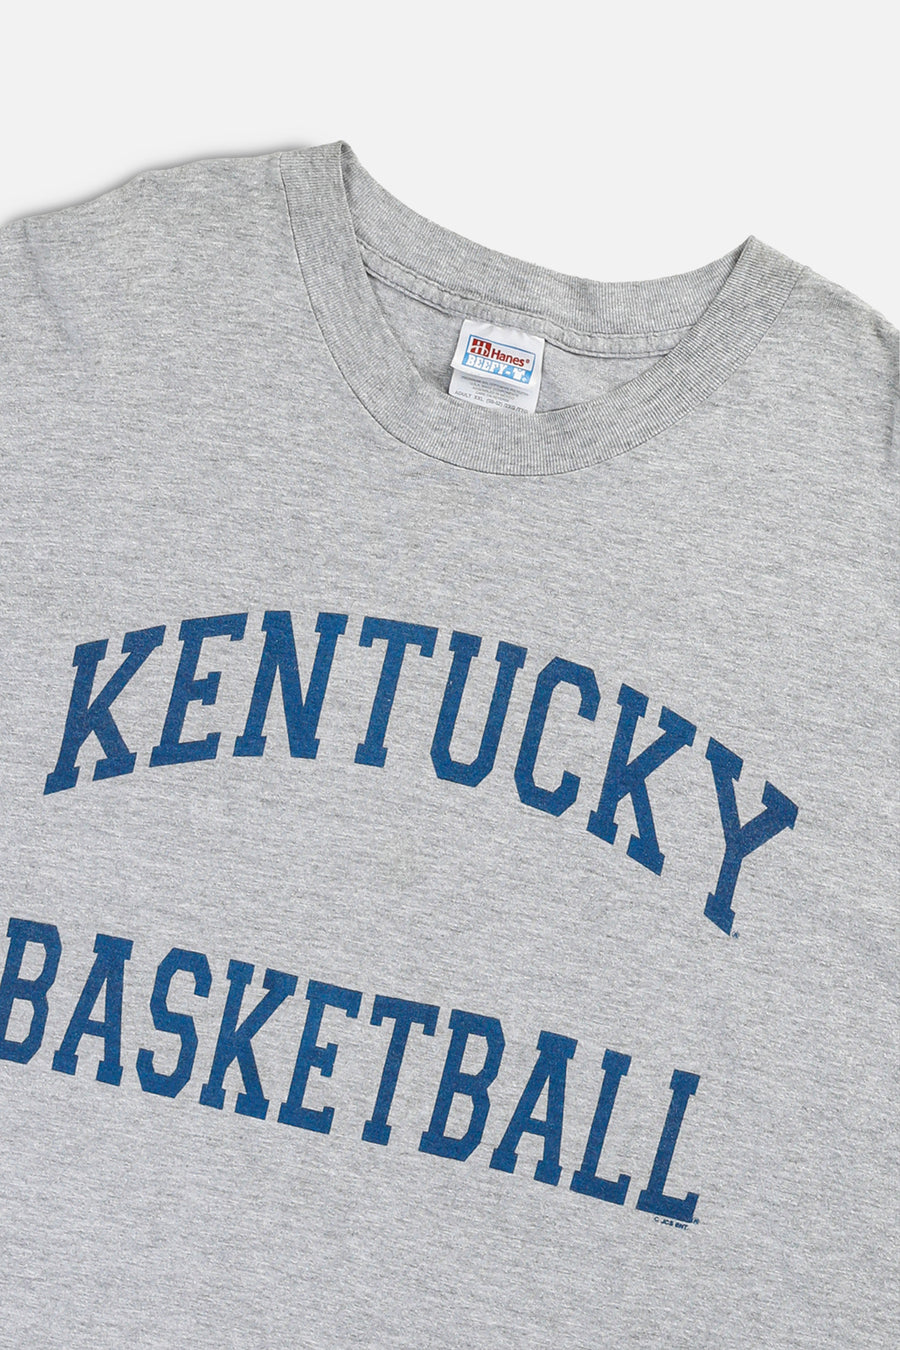 Vintage Kentucky Basketball Tee - XXL